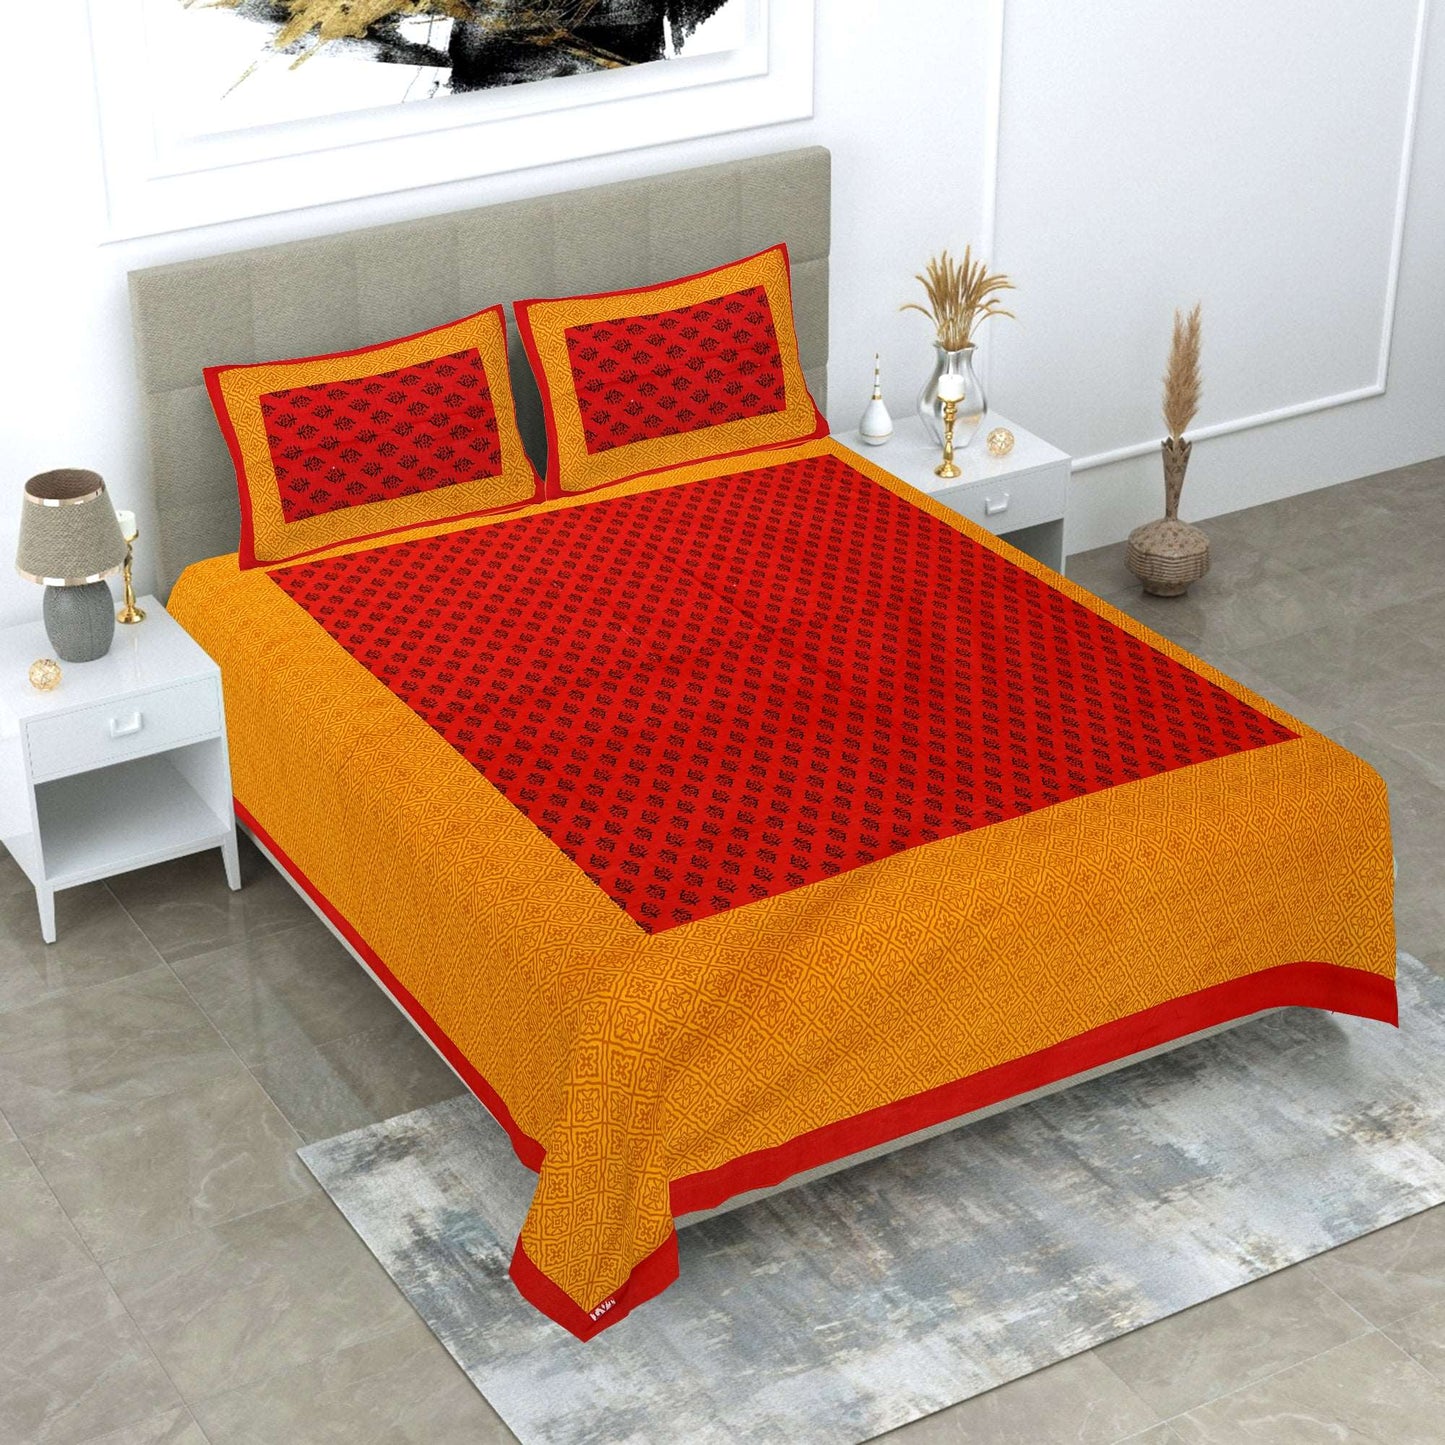 100% Cotton Bedsheet 180 -TC Cotton Double Size Bedsheet, 5 set Combo Pack With 10 Pillow Cover - JaipurToHome